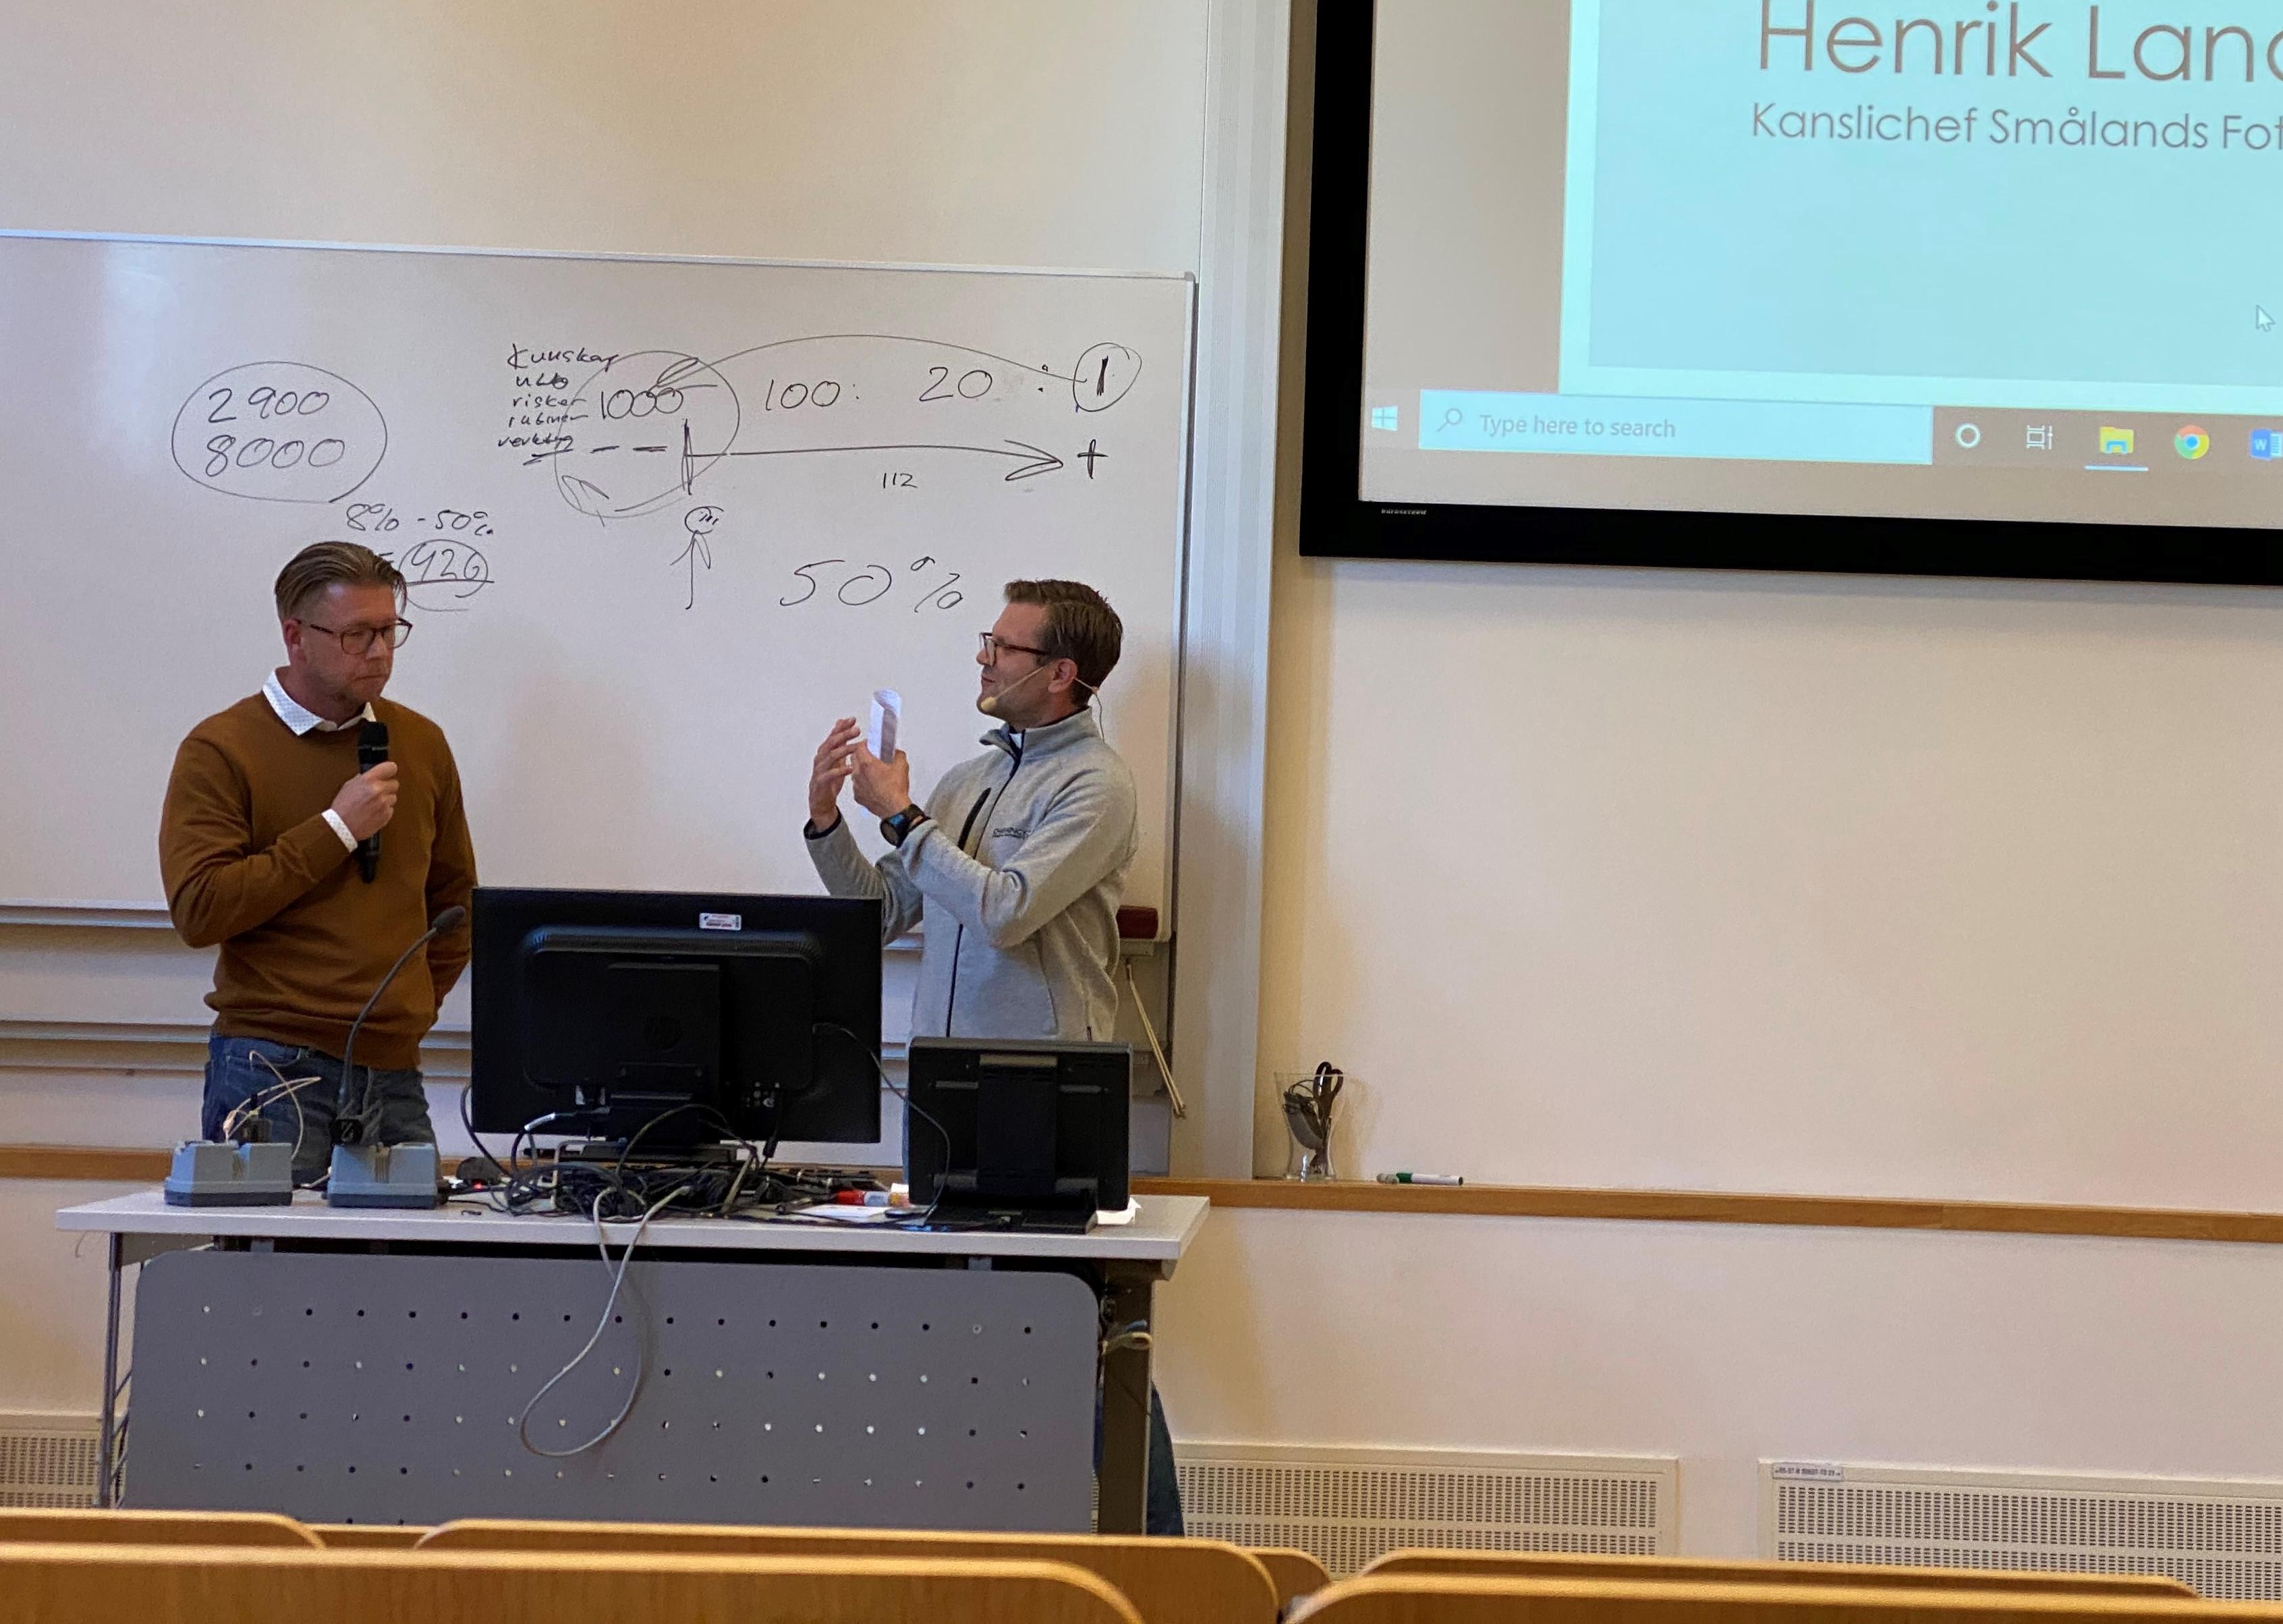 Henrik Landén and John Ahlström discussing during the presentation.